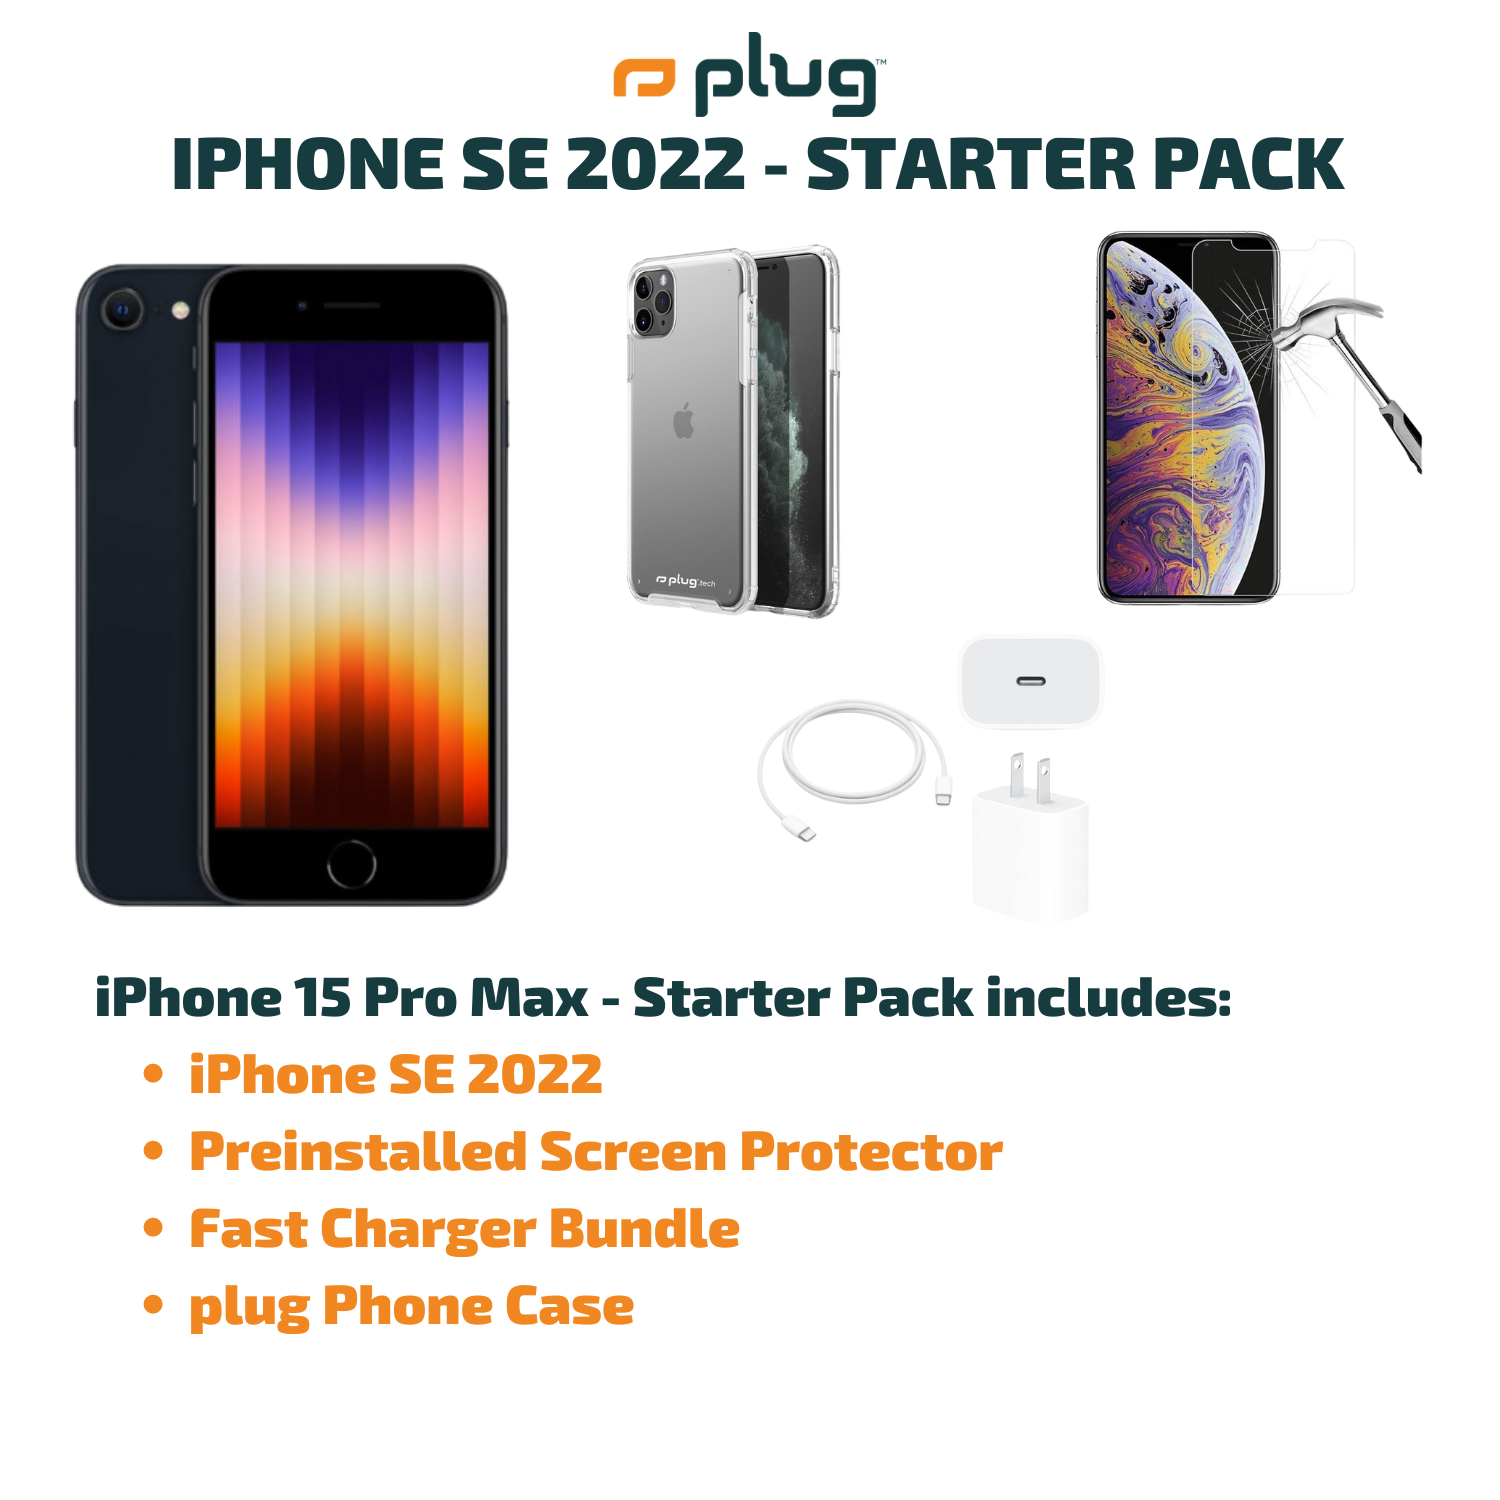 iPhone SE 2022 - Starter Pack